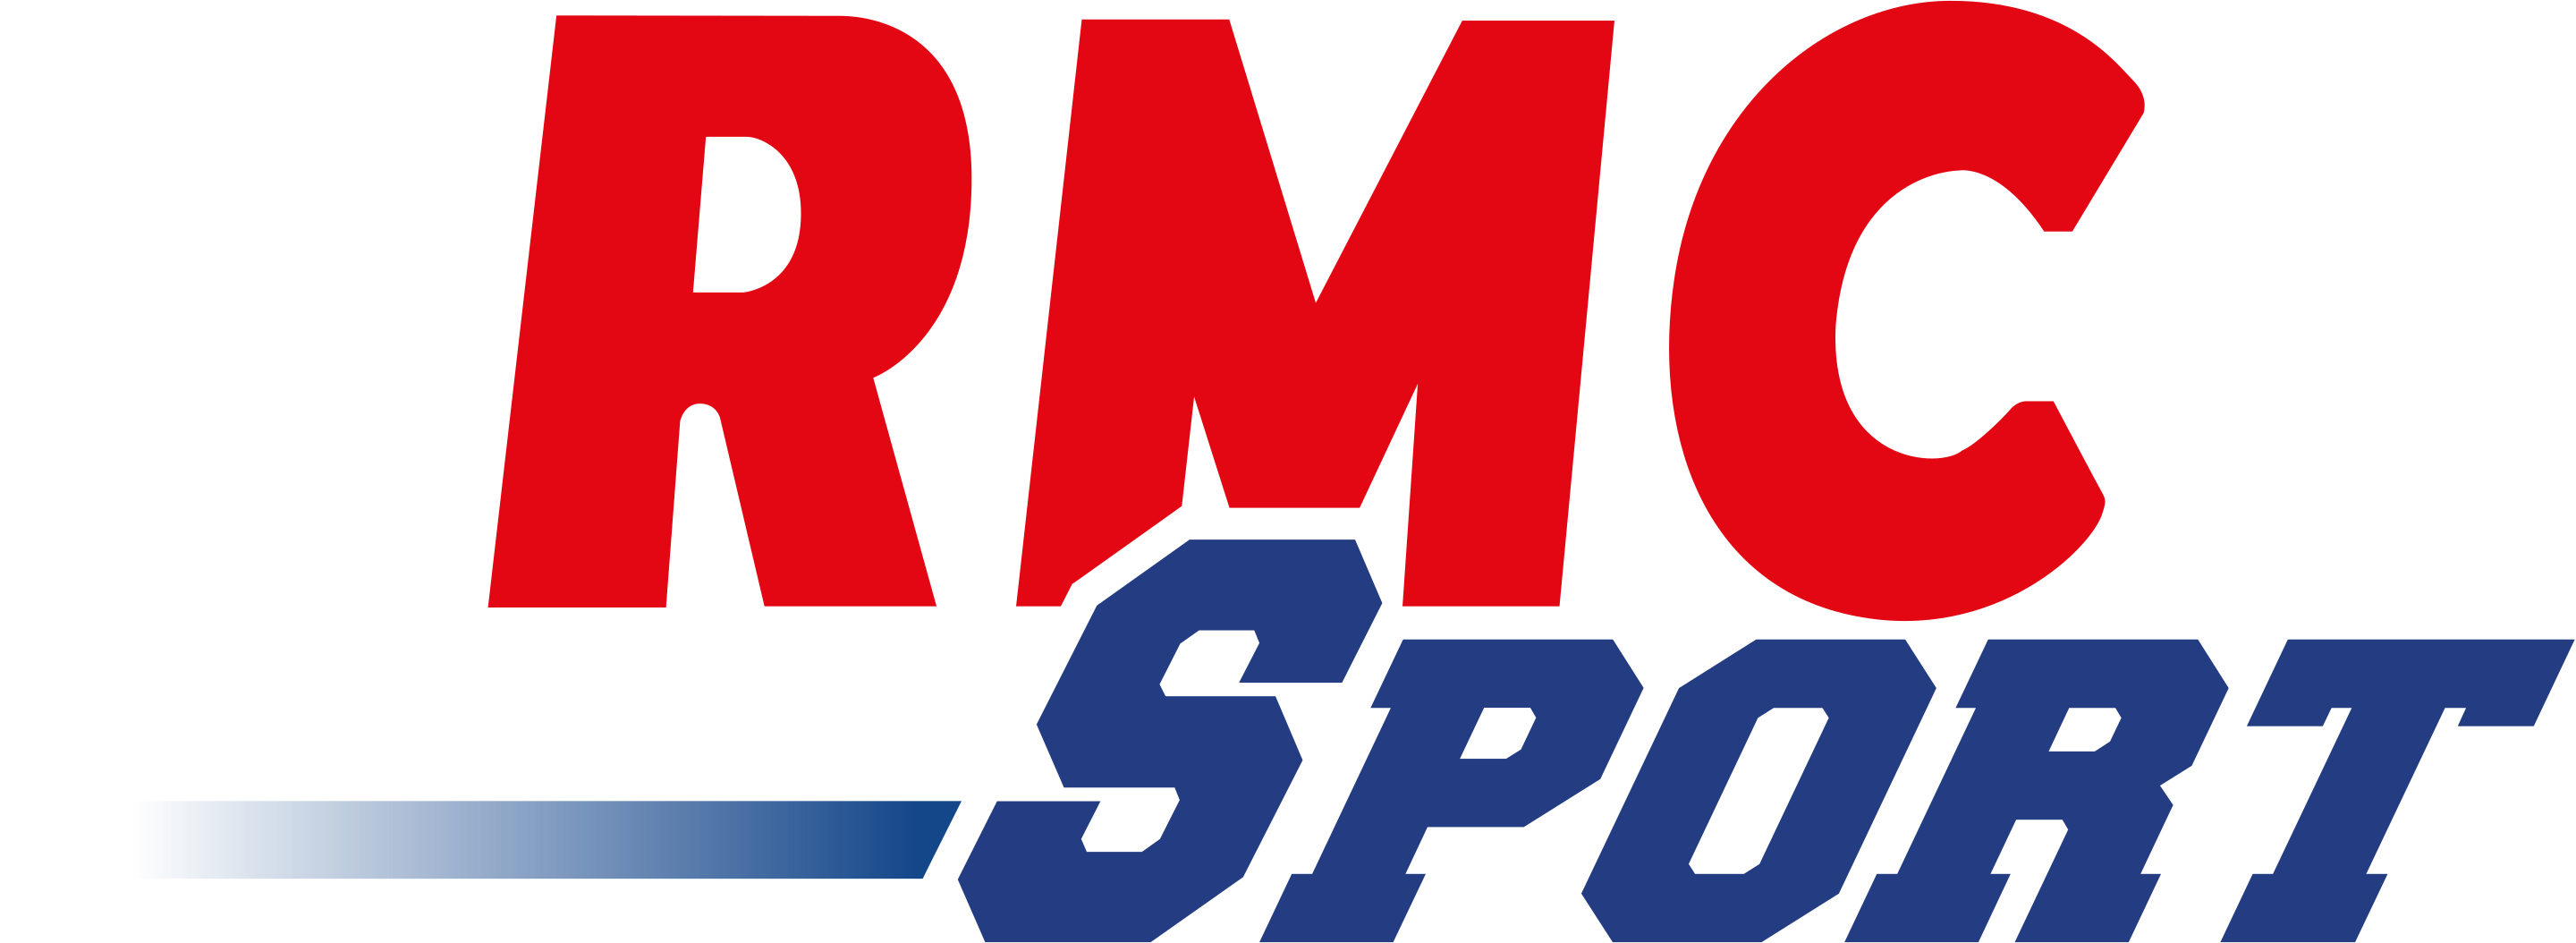 Logo_RMC_Sport_2018.svg